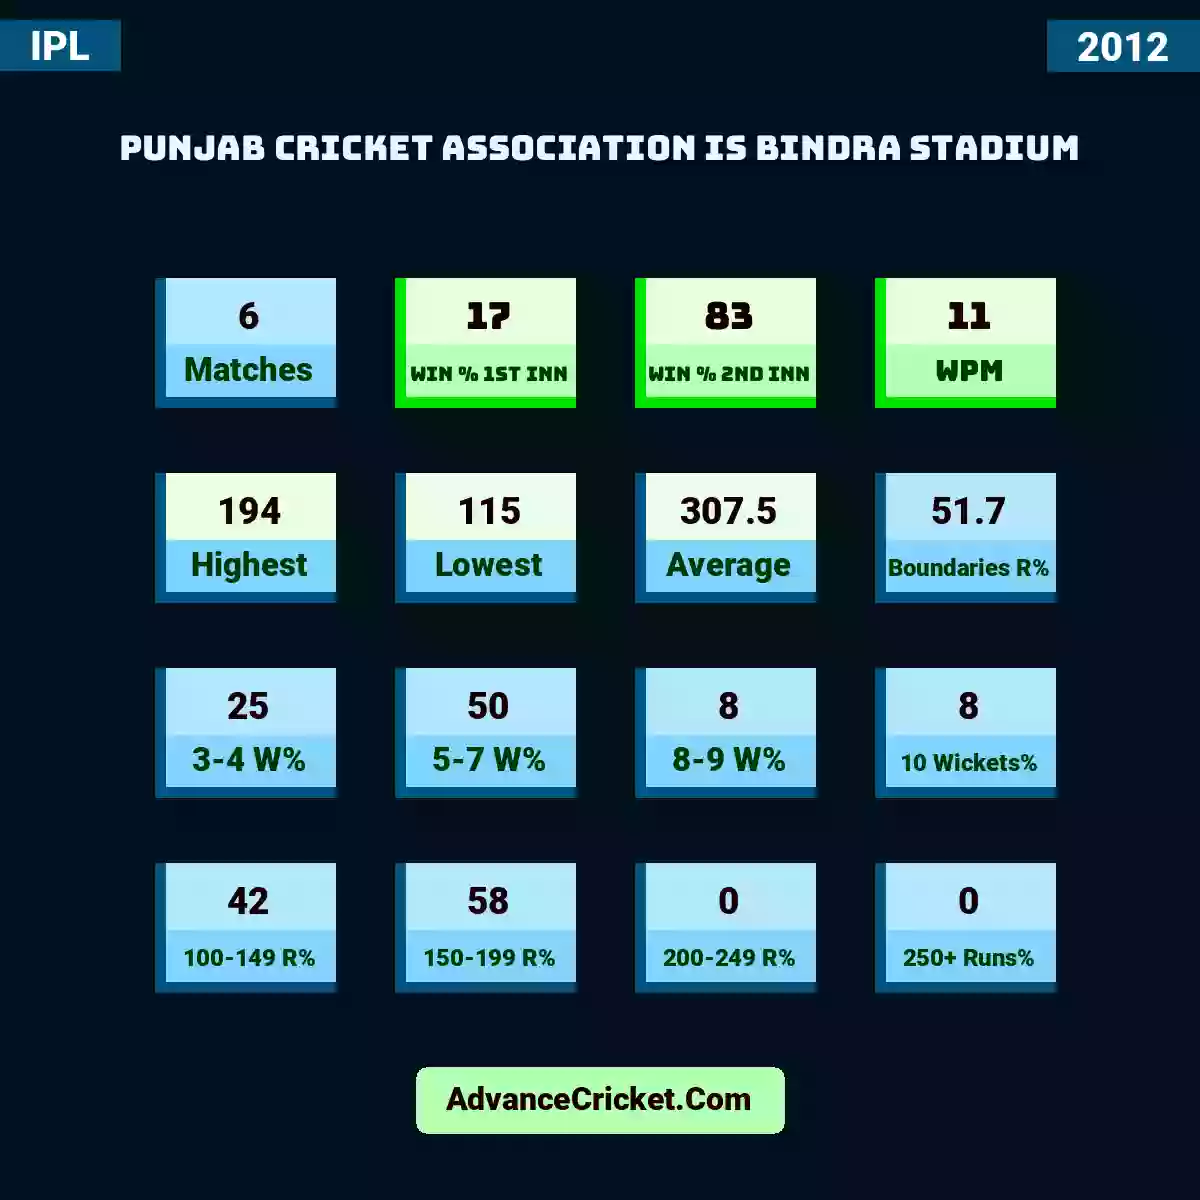 Image showing Punjab Cricket Association IS Bindra Stadium with Matches: 6, Win % 1st Inn: 17, Win % 2nd Inn: 83, WPM: 11, Highest: 194, Lowest: 115, Average: 307.5, Boundaries R%: 51.7, 3-4 W%: 25, 5-7 W%: 50, 8-9 W%: 8, 10 Wickets%: 8, 100-149 R%: 42, 150-199 R%: 58, 200-249 R%: 0, 250+ Runs%: 0.